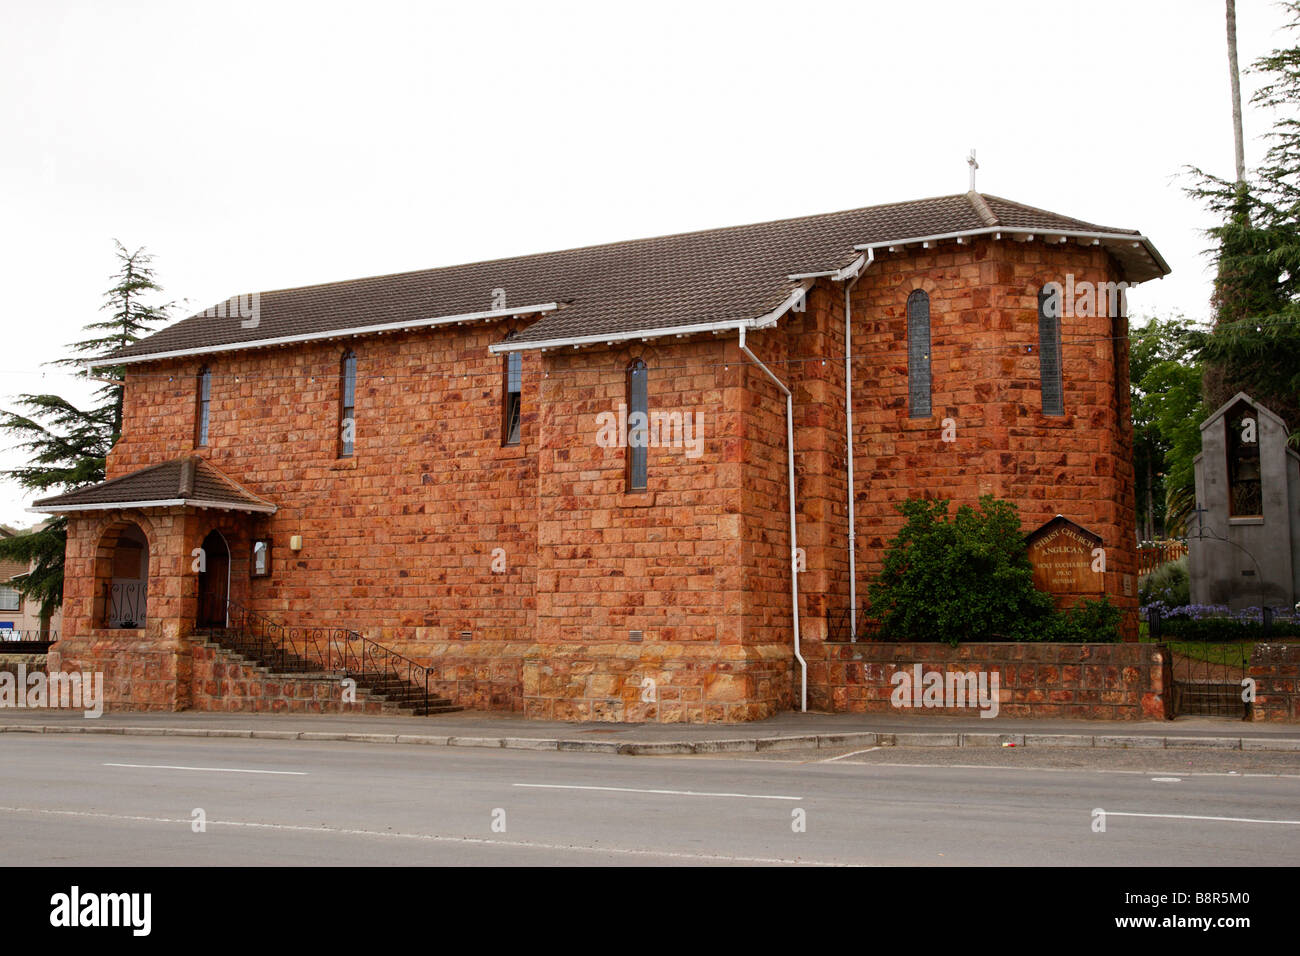 christ church anglican voortrek street swellendam south africa Stock Photo